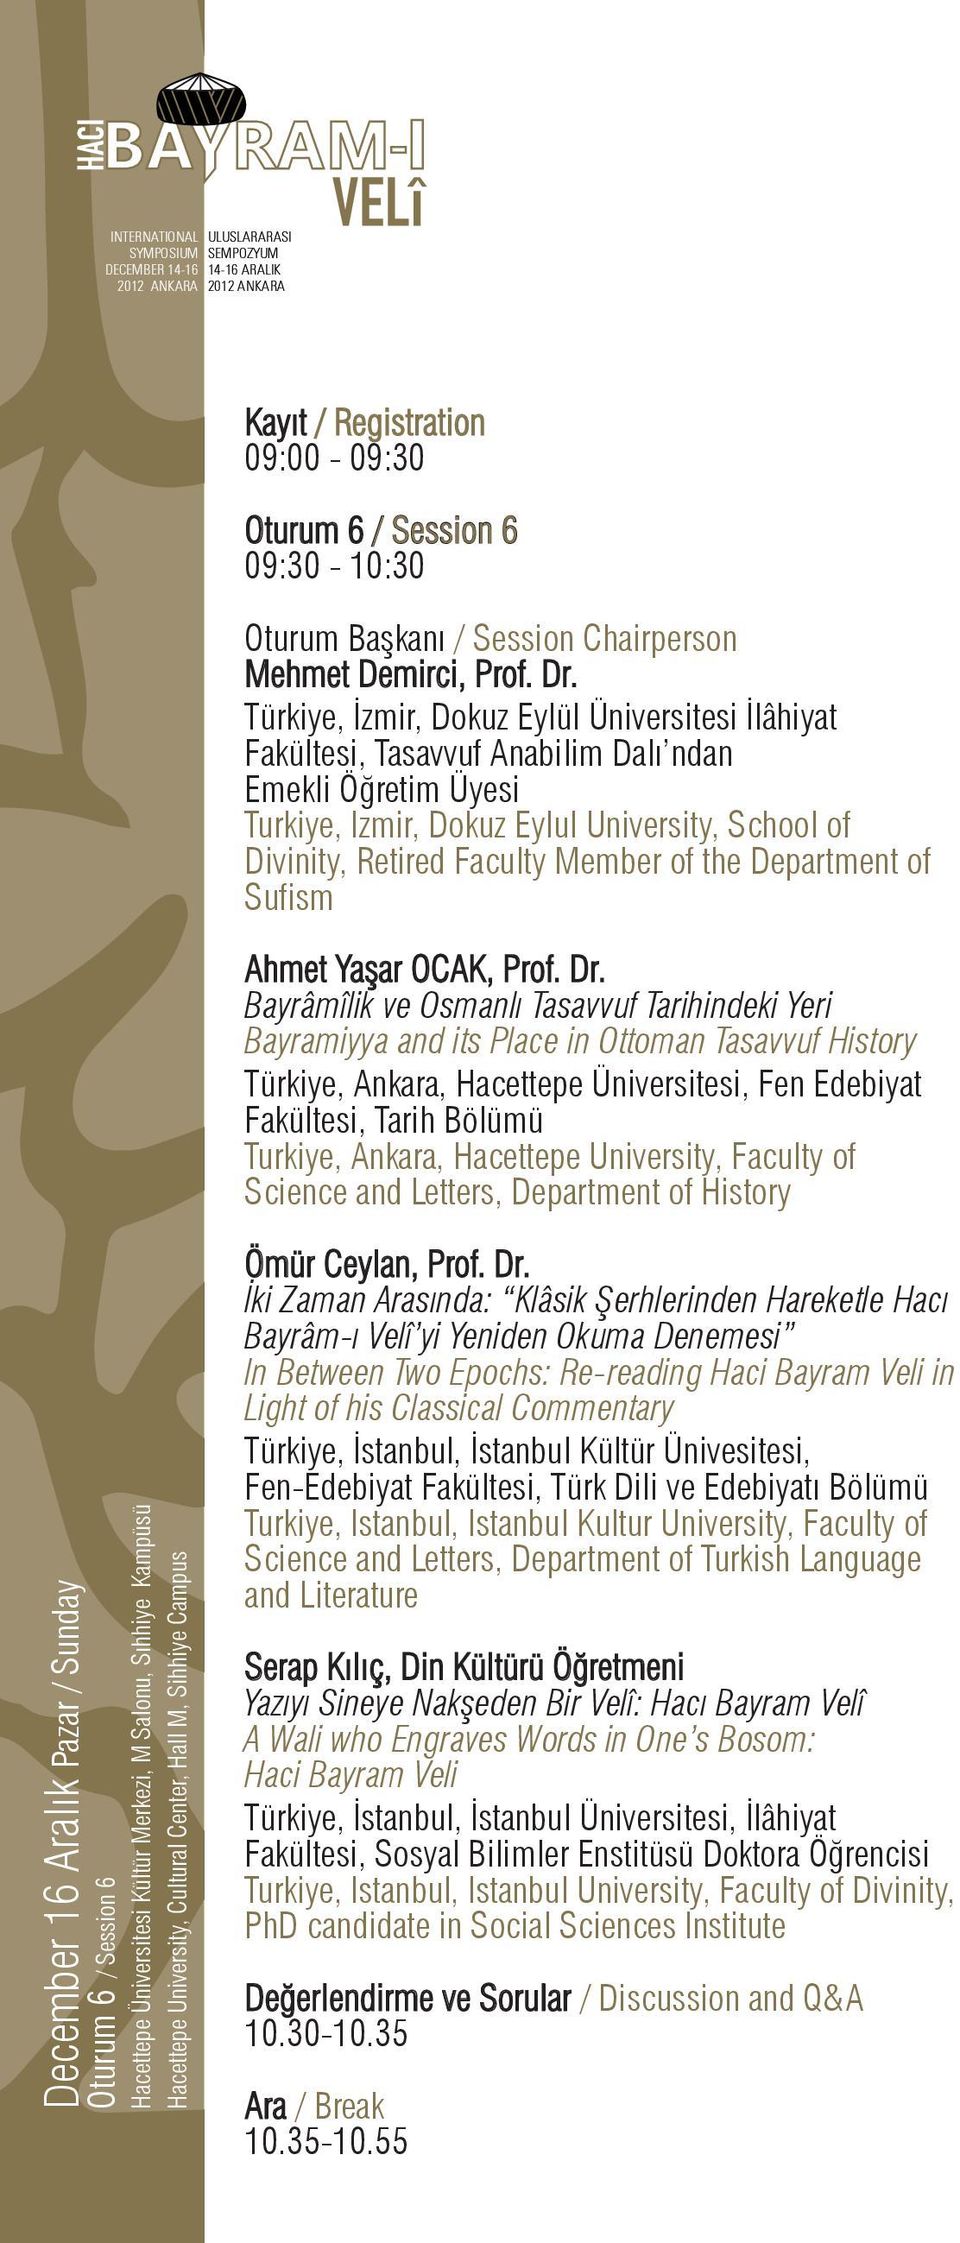 Department of Sufism Ahmet Yaşar OCAK, Prof. Dr.